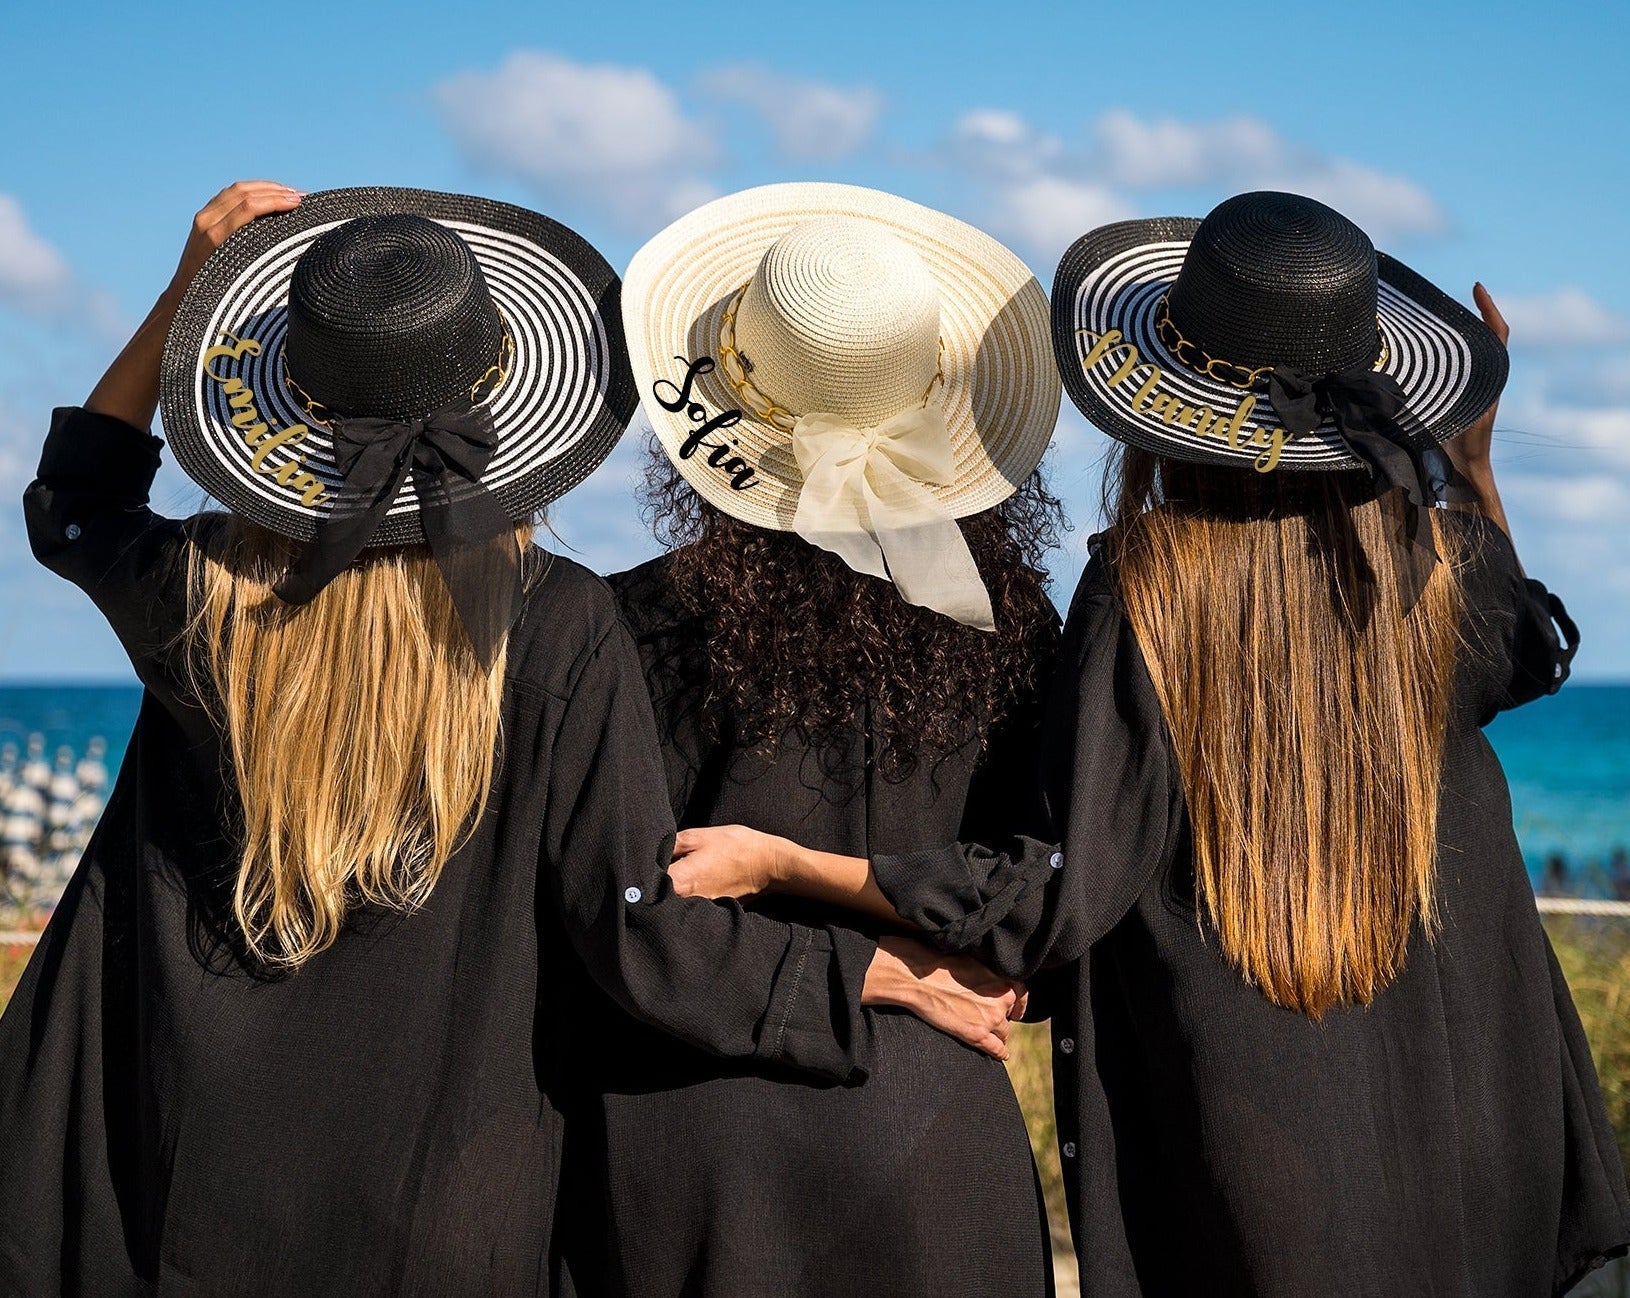 Women’s Striped Sun Hat with Bow - Floppy Sun Hats